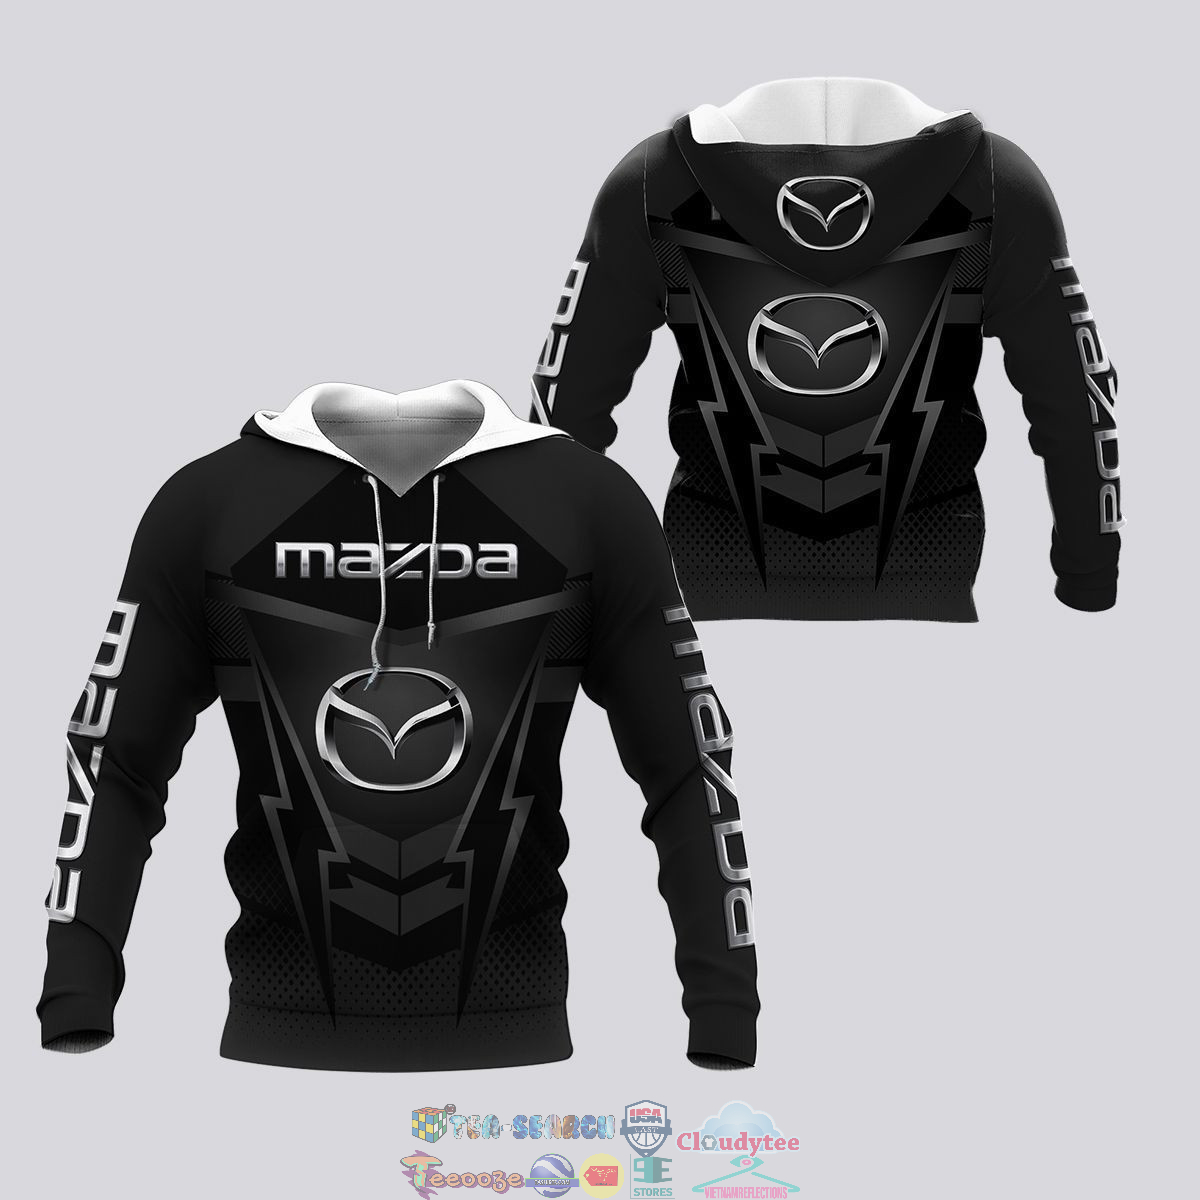 Mazda ver 5 3D hoodie and t-shirt – Saleoff